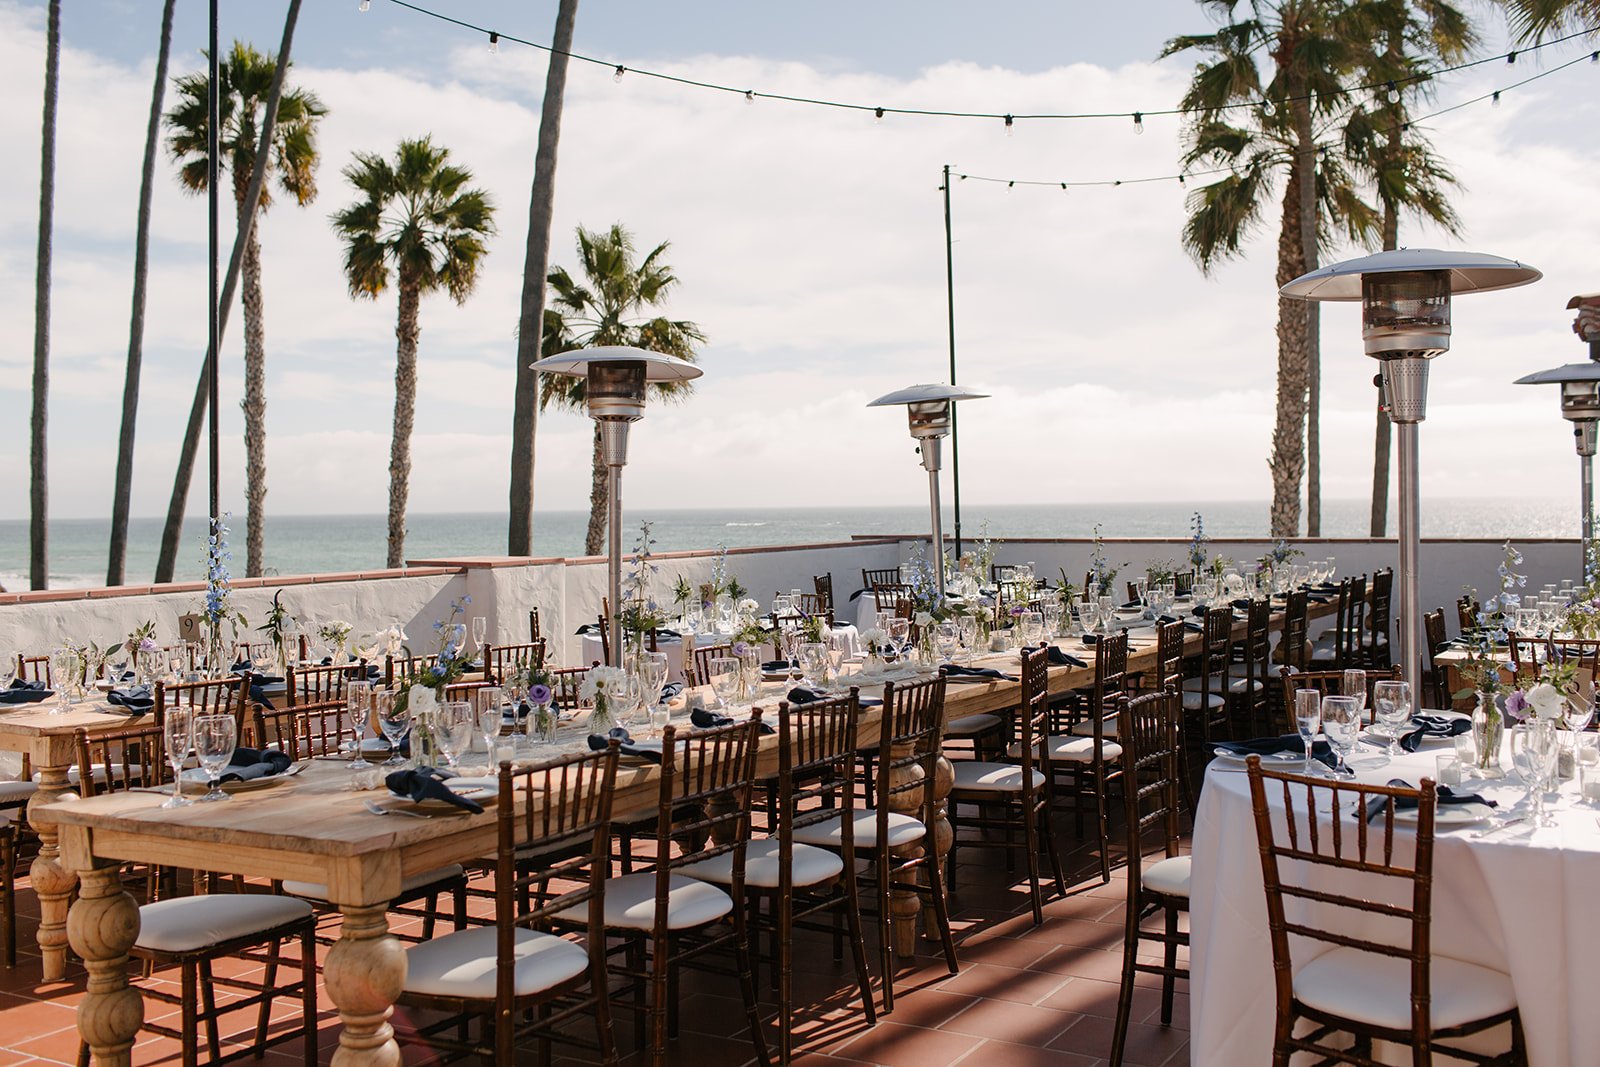 southern-california-wedding-venue-pacific-coast-ocean-views-waterfront-spanish-style-socal-san-diego-wildflower-bud-vases